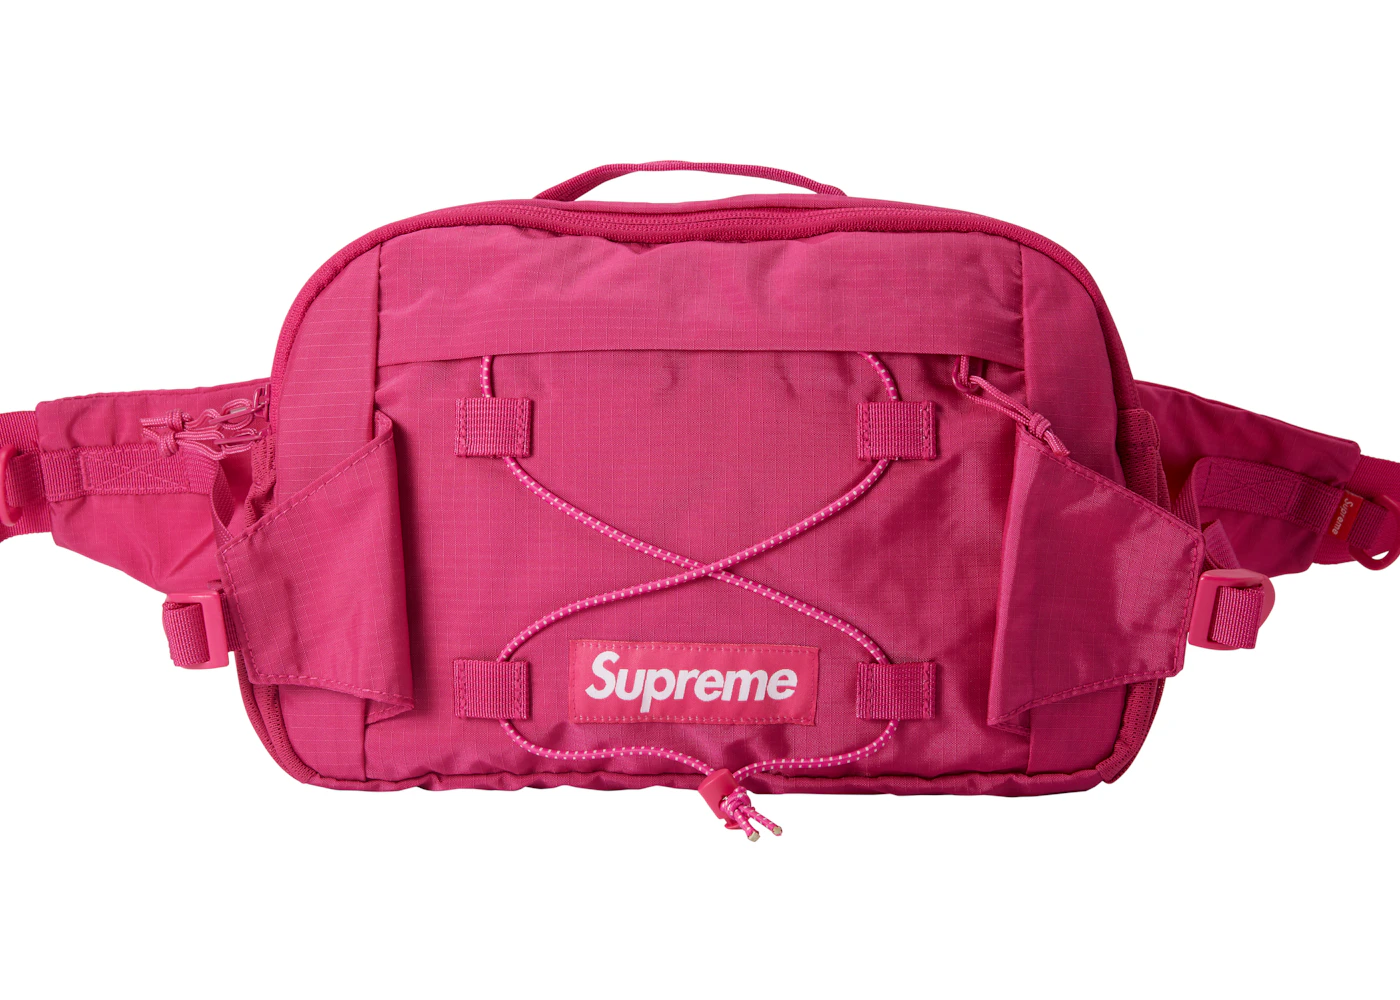 Supreme Waist Bag Magenta - SS17 - GB